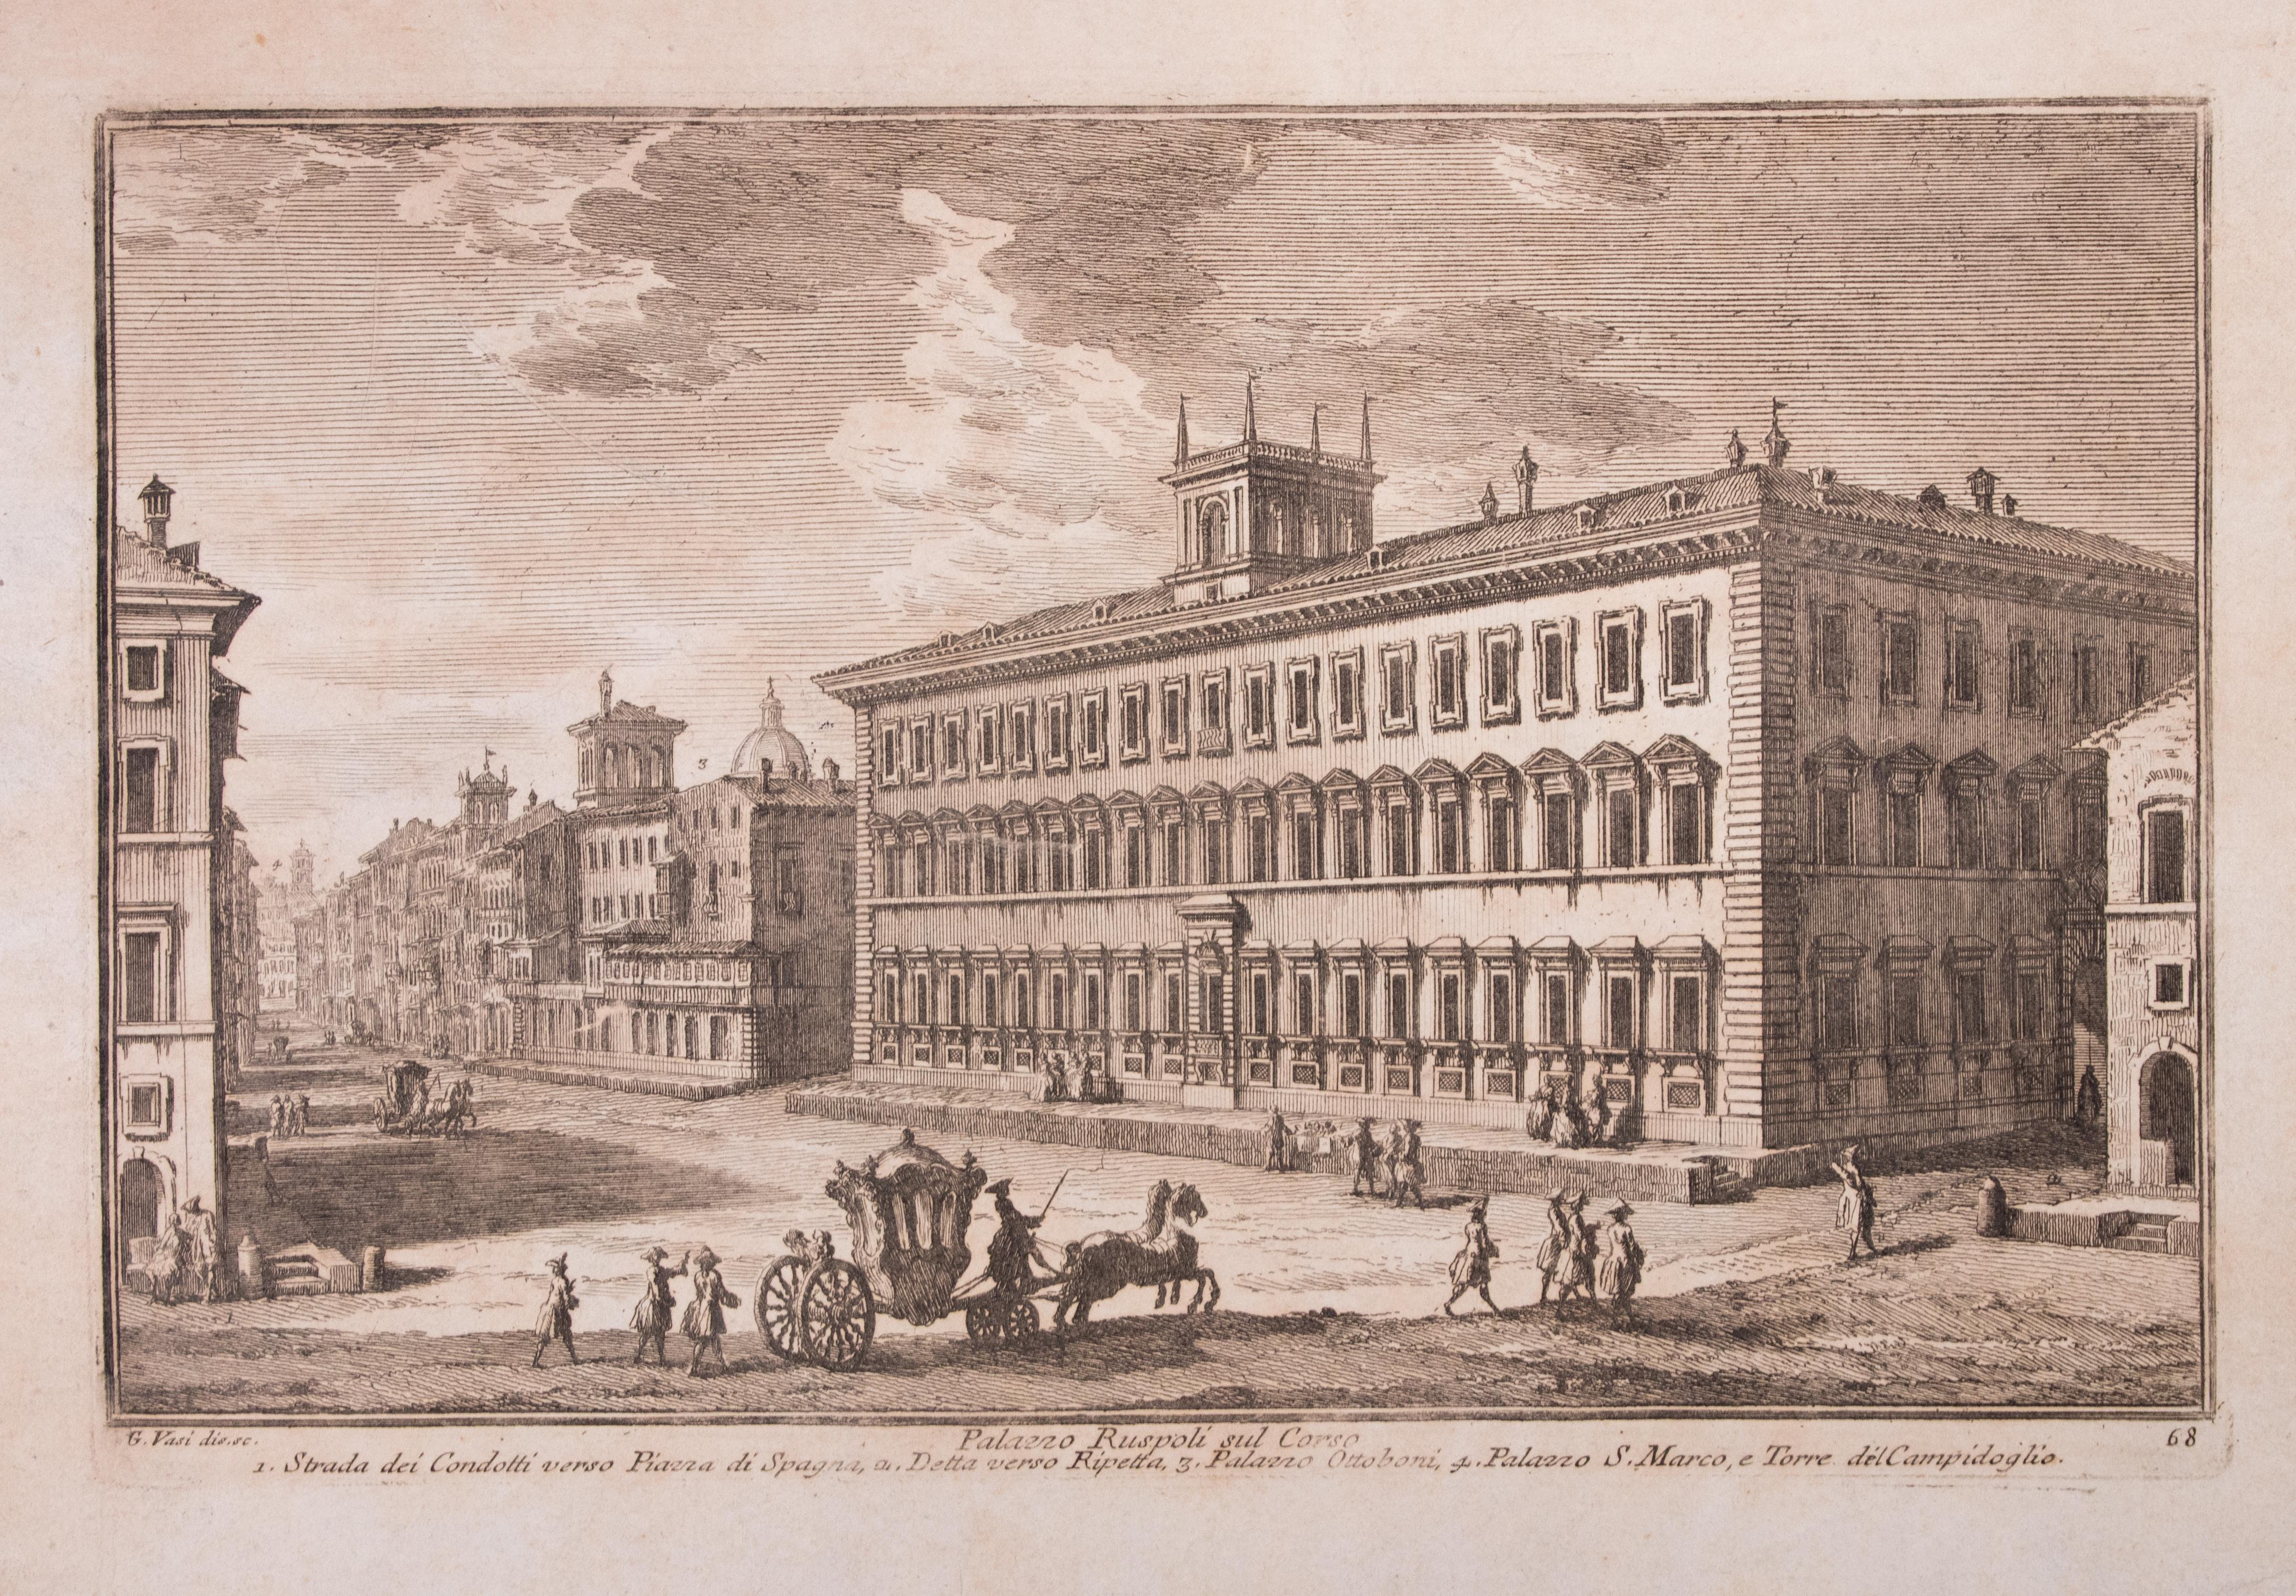 Giuseppe Vasi Figurative Print - Palazzo Ruspoli sul Corso - Etching by G. Vasi - Late 18th century